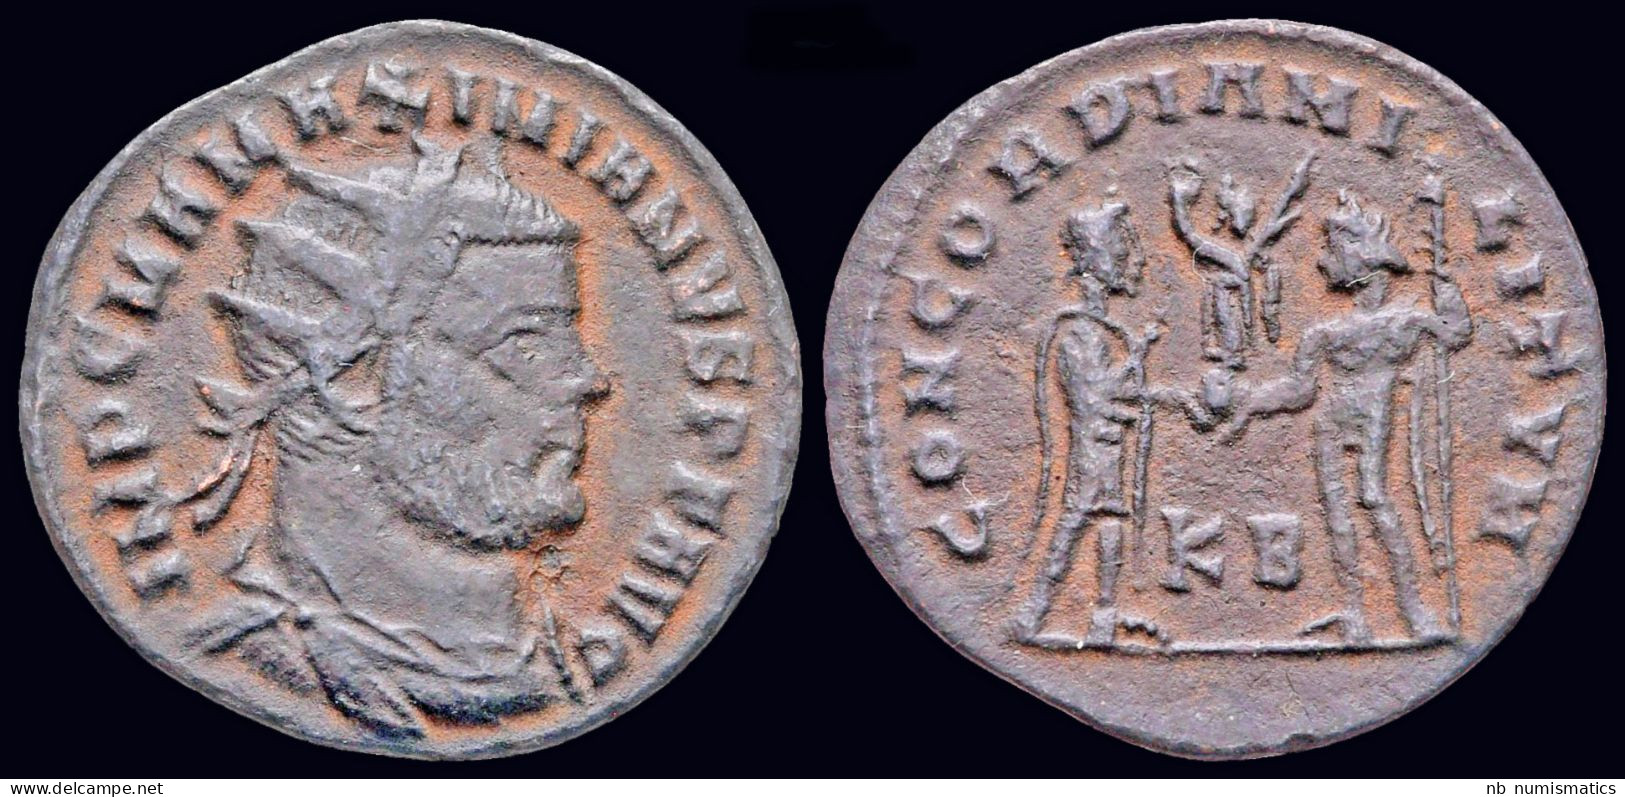 Maximianus Herculius AE Radiatus Jupiter Presents Victory On Globe - The Tetrarchy (284 AD To 307 AD)